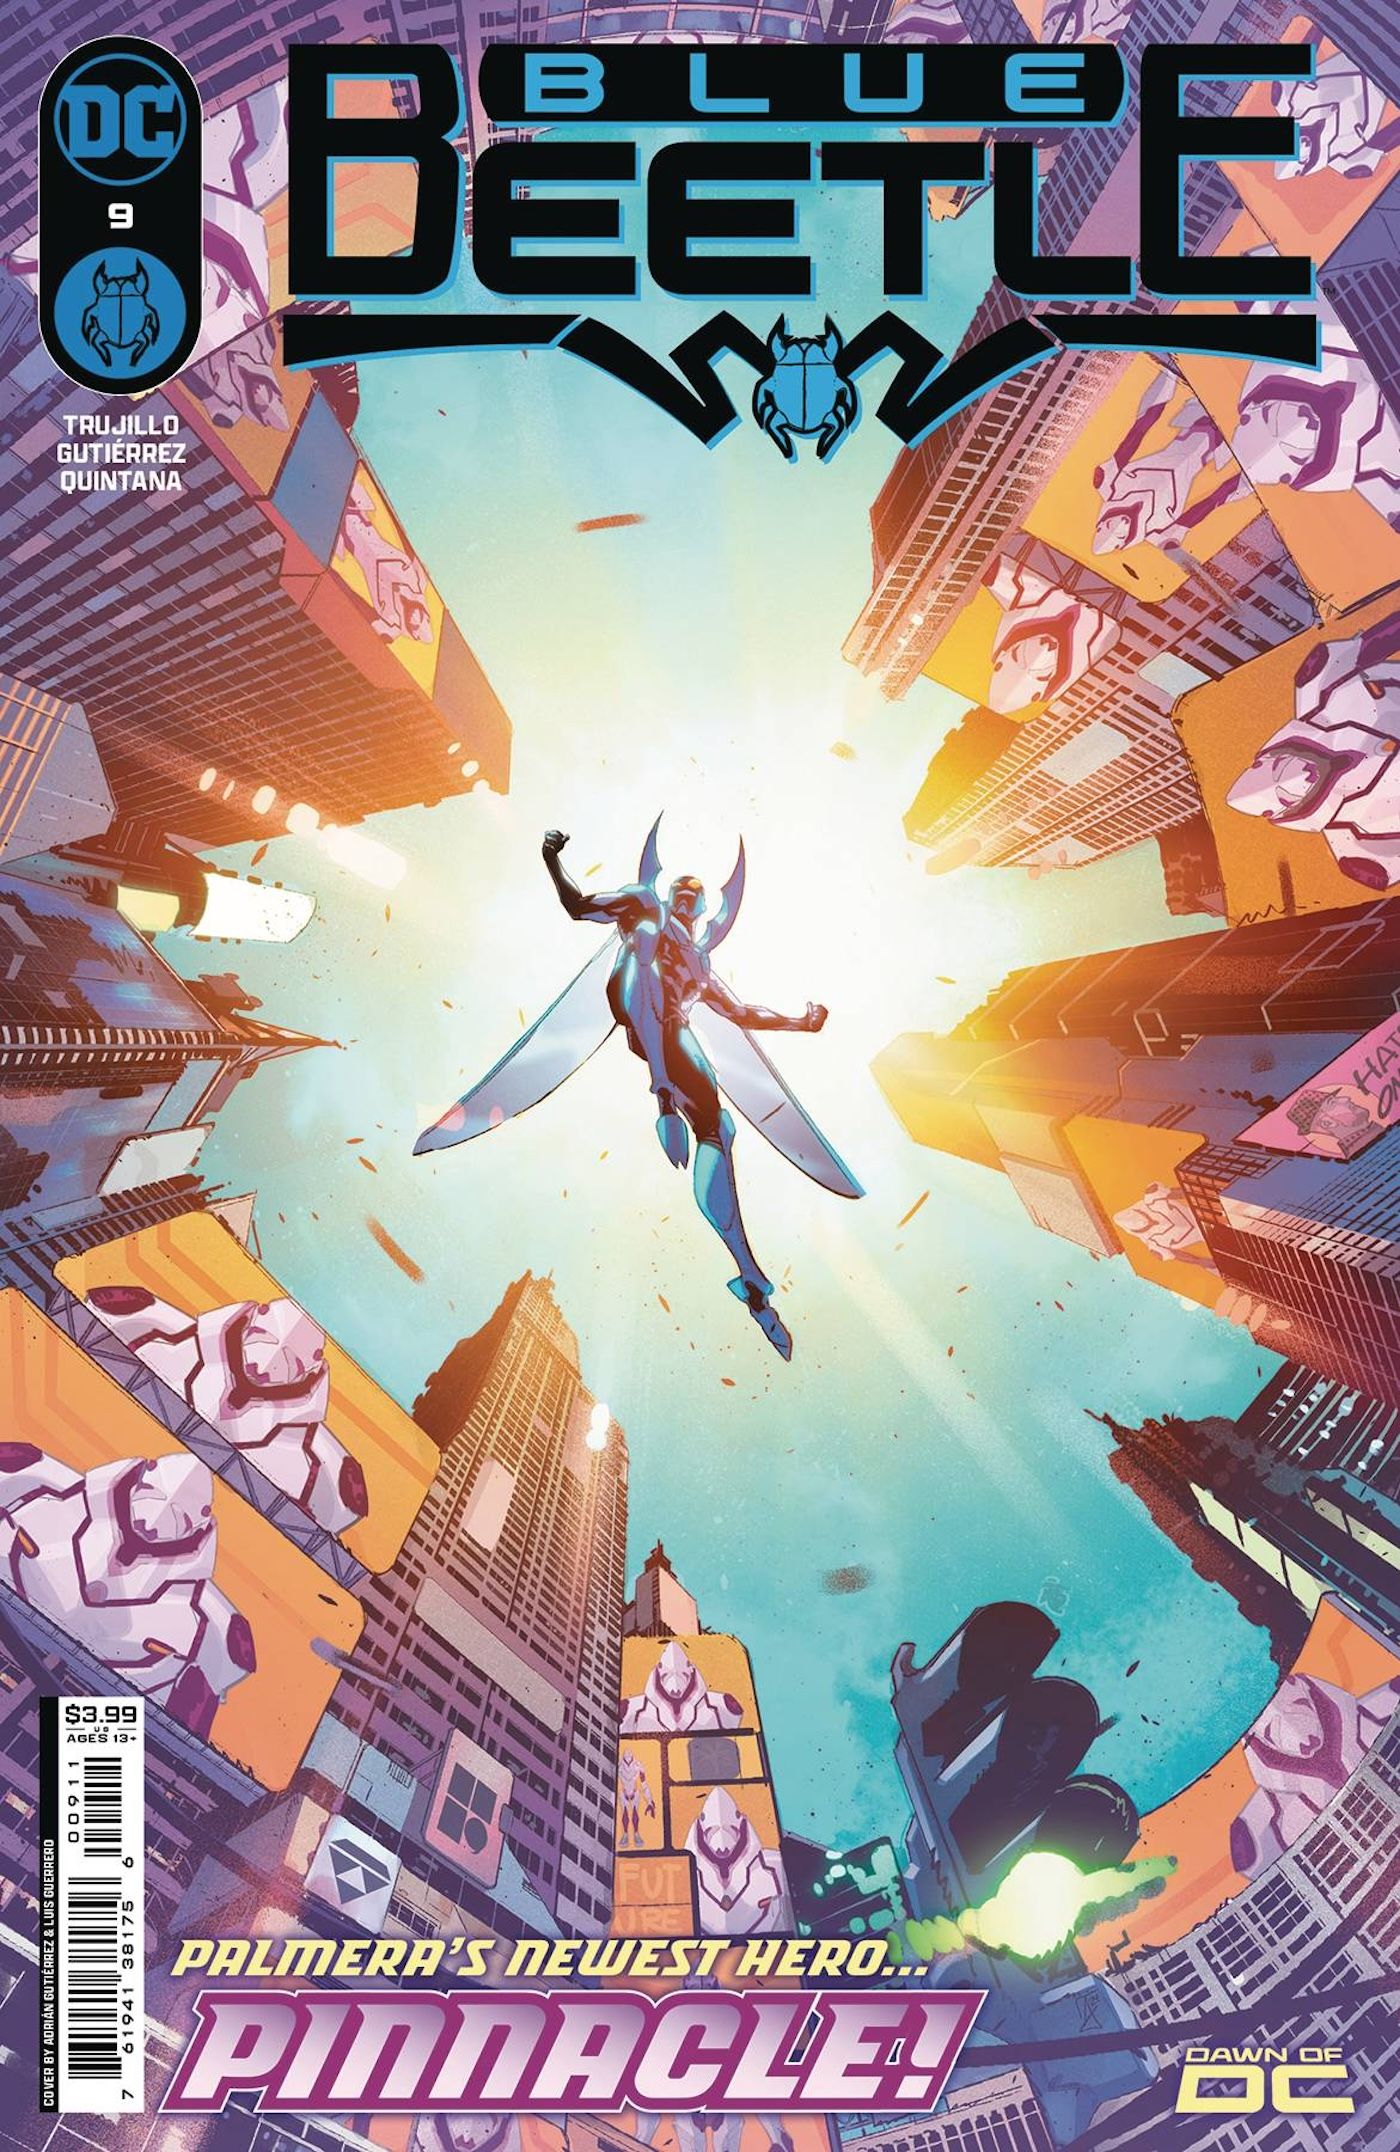 Blue Beetle 9 Main Cover: Jaime Reyes flying through a city.